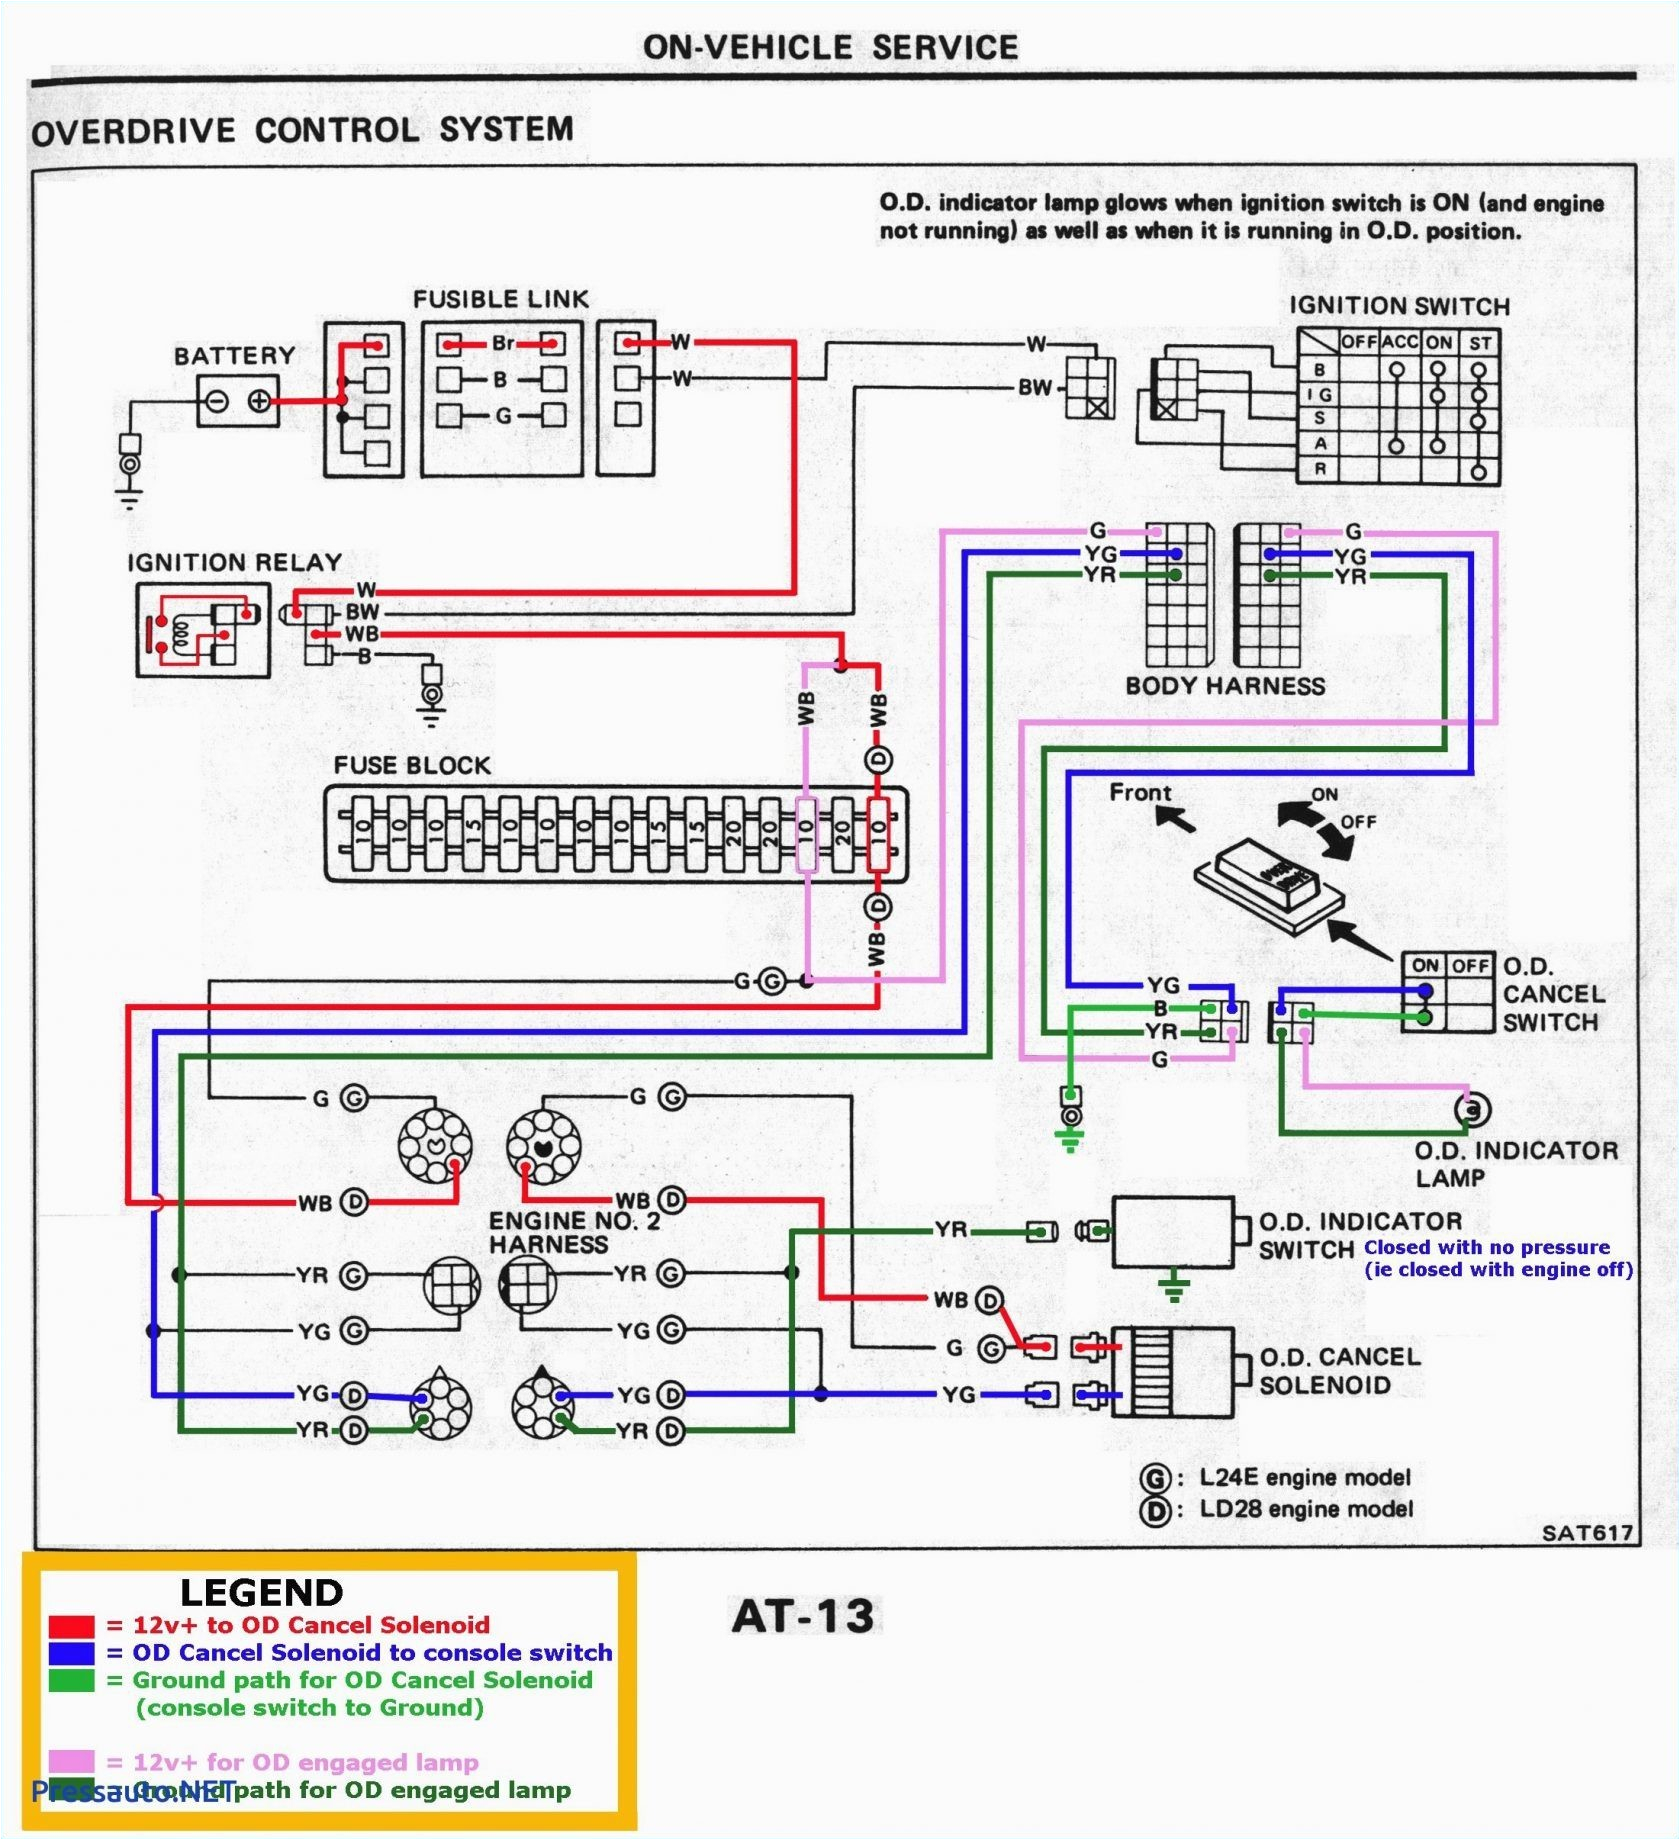 ae86 wiring diagram data schematic diagram ae86 headlight wiring diagram wiring diagram schematic ae86 ignition wiring